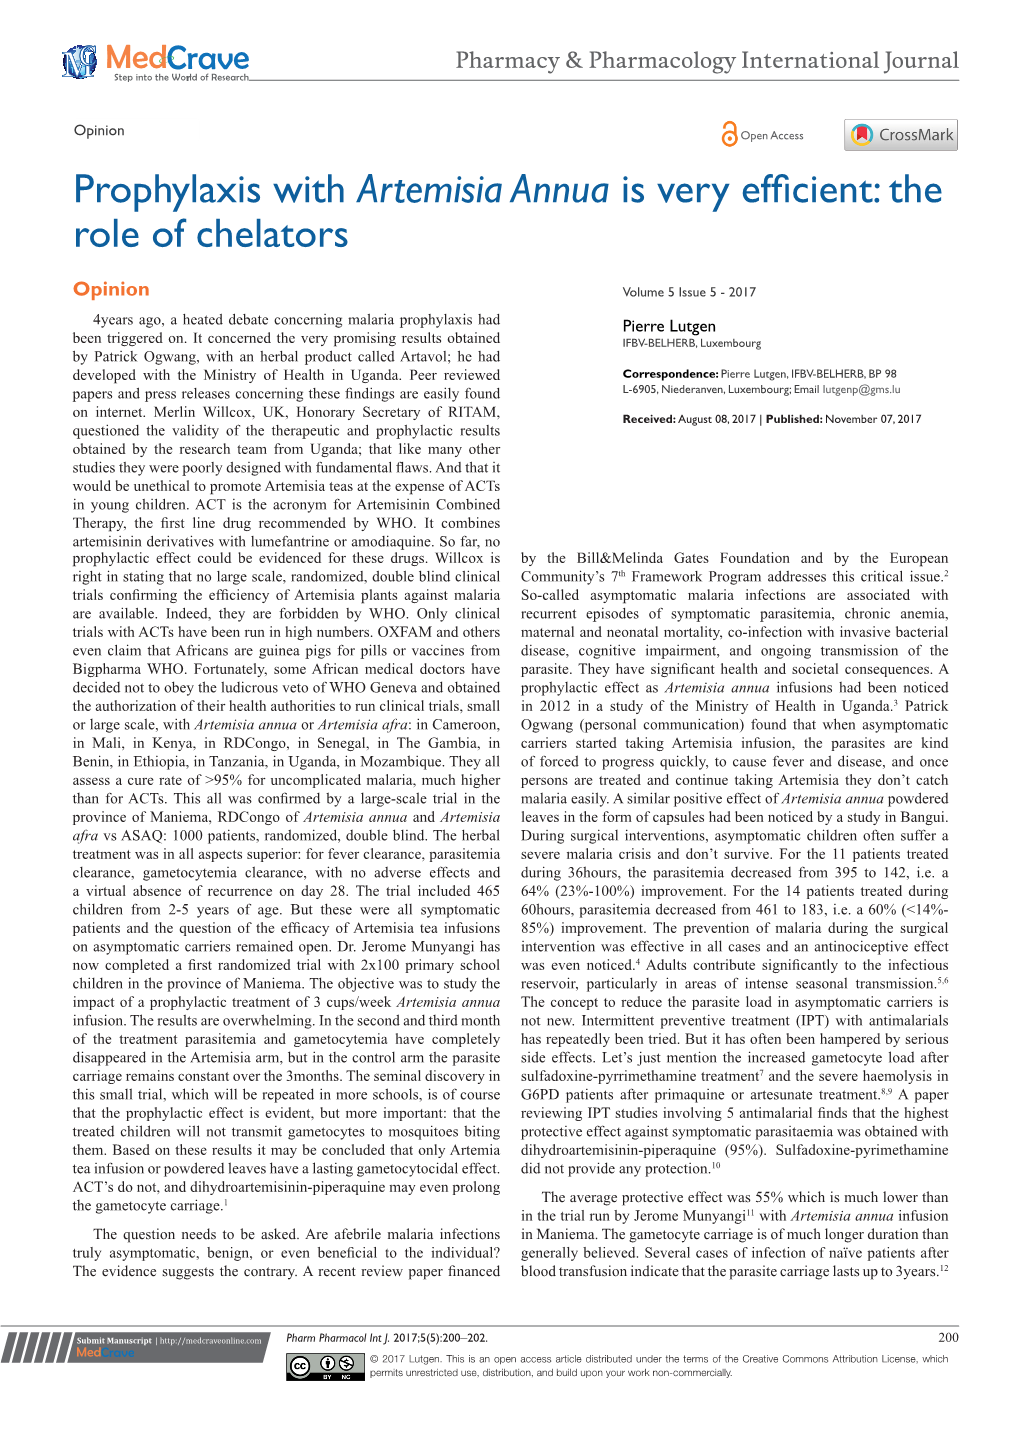 Artemisia Annua Is Very Efficient: the Role of Chelators